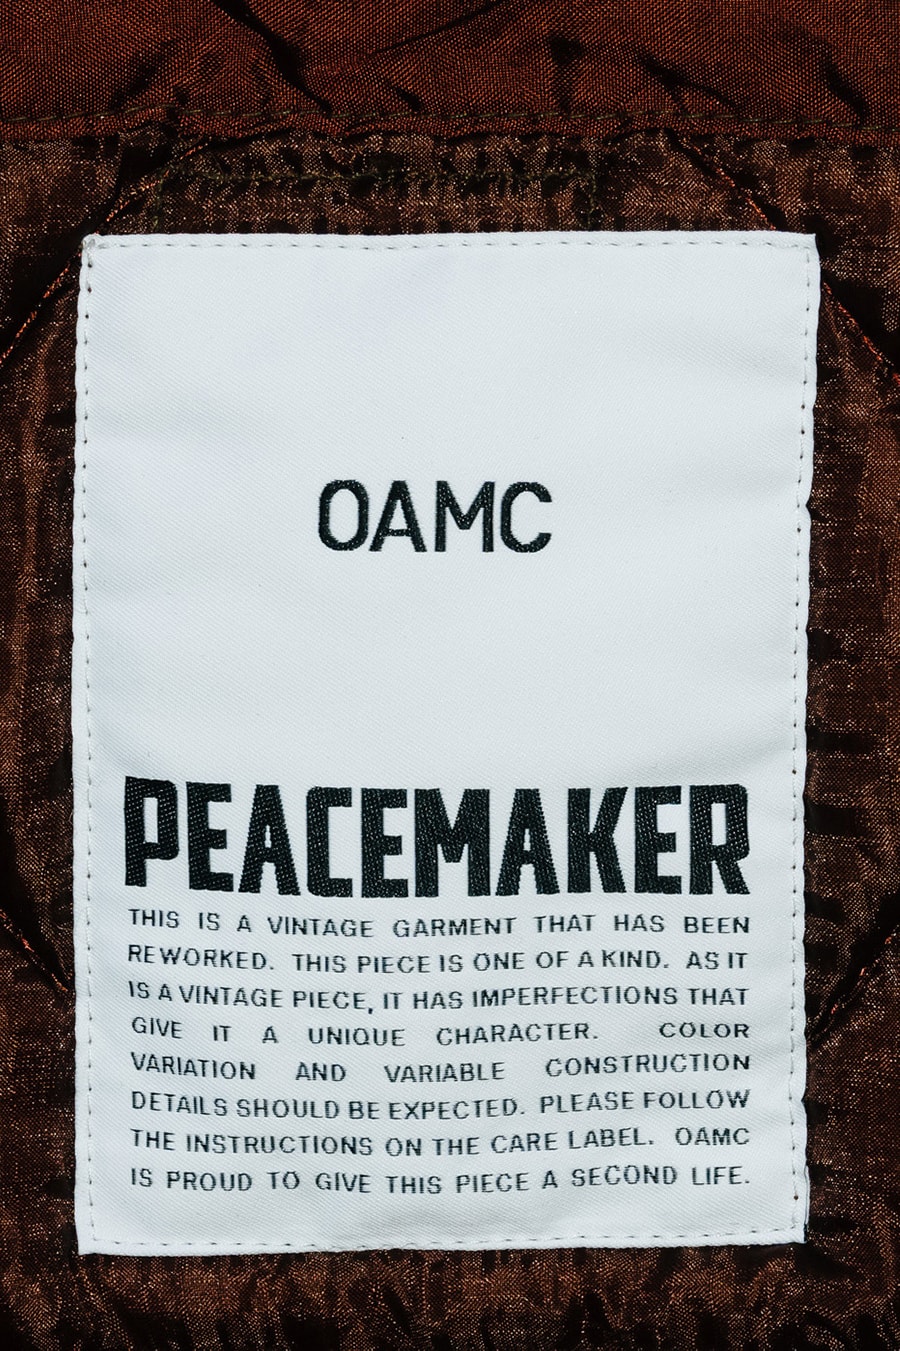 OAMC Peacemaker Liner "DOT" Jacket Drop 2 Spring/Summer 2021 SS22 John Baldessari M-65 Outerwear Luke Meier Release Information